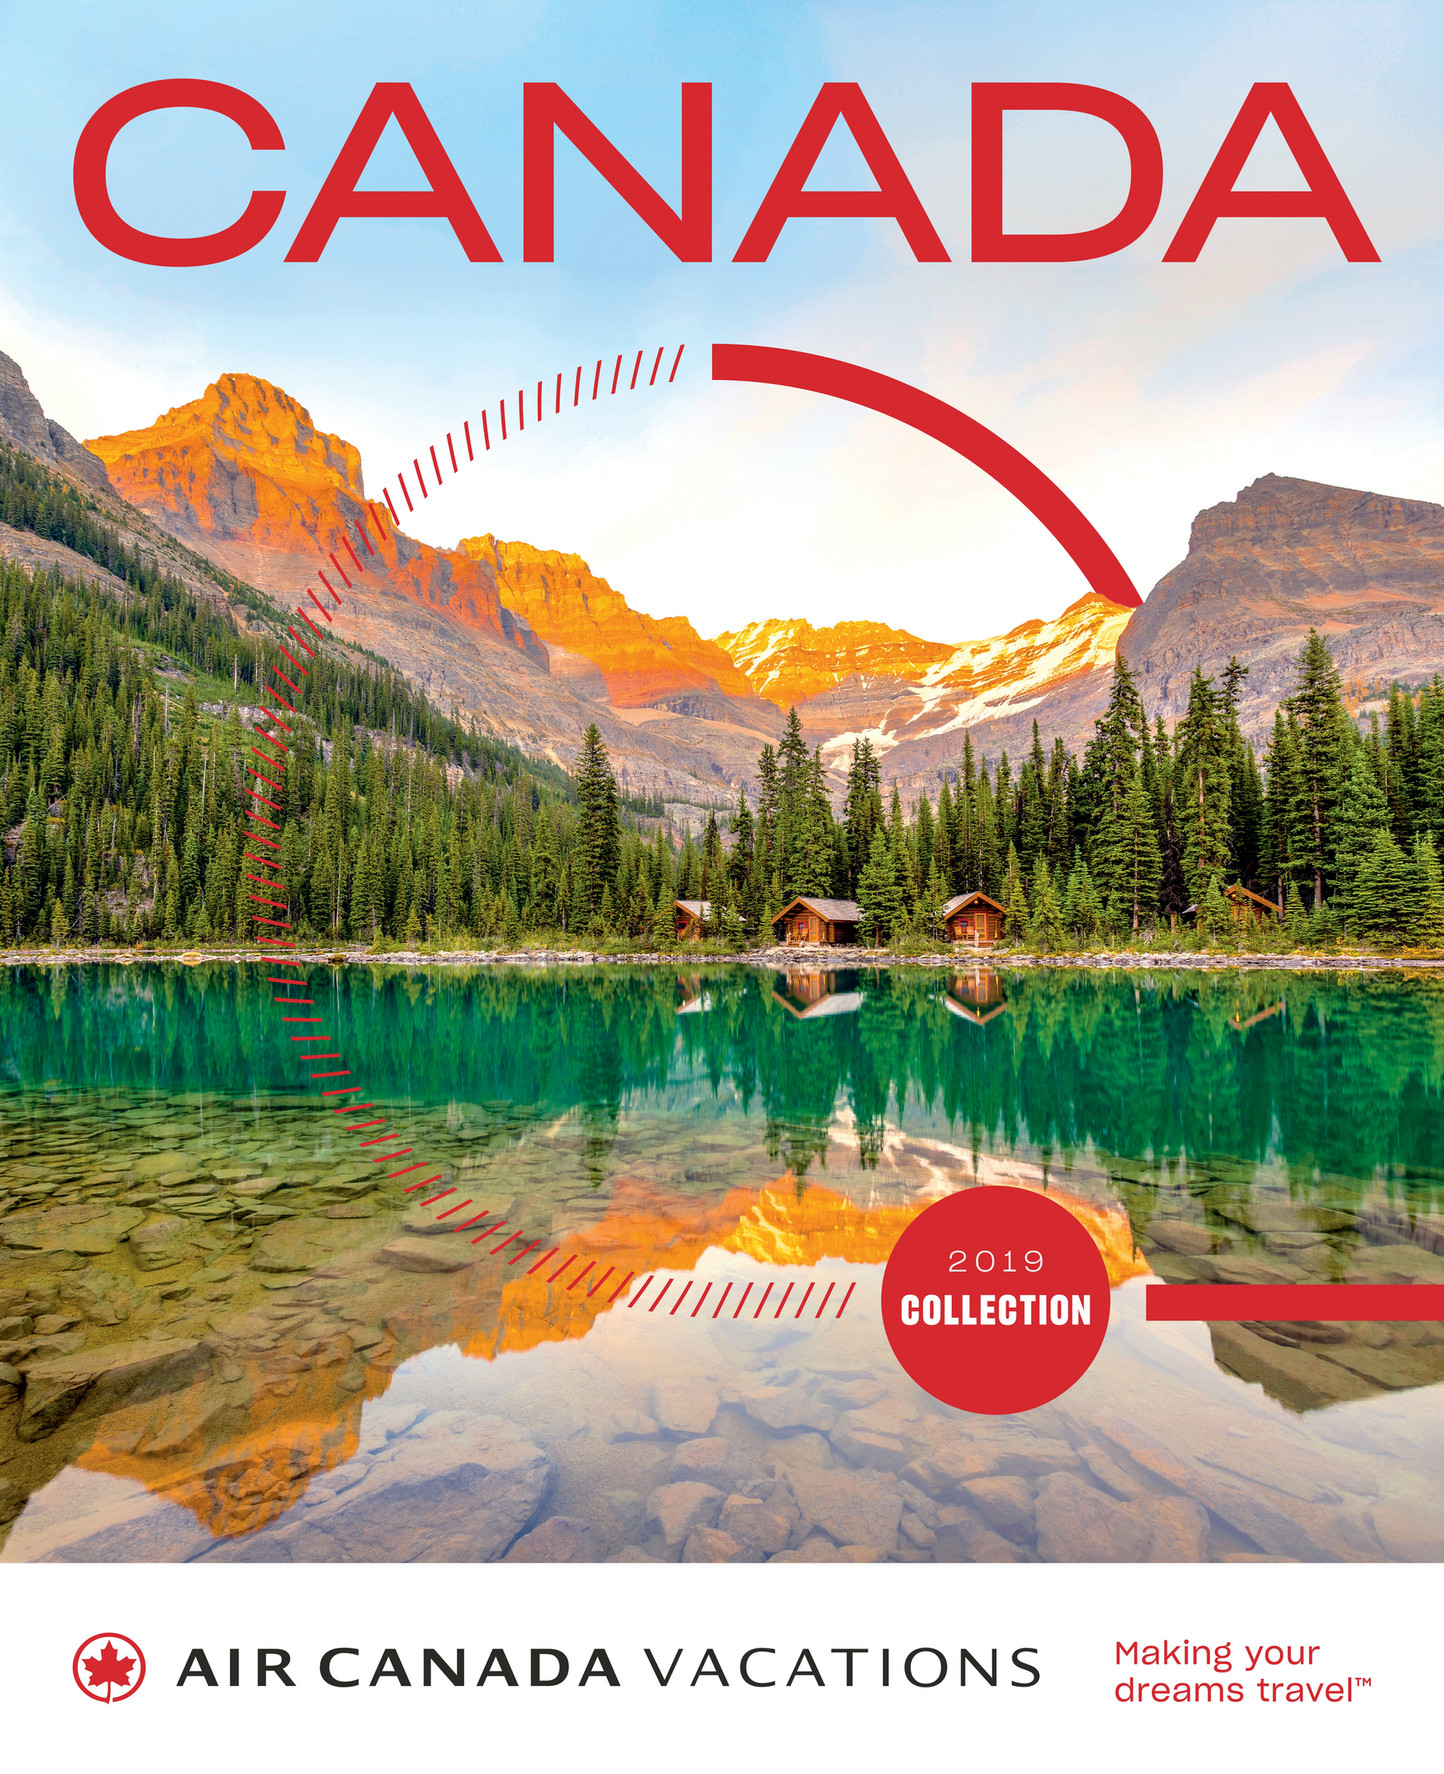 canadian travel deals website